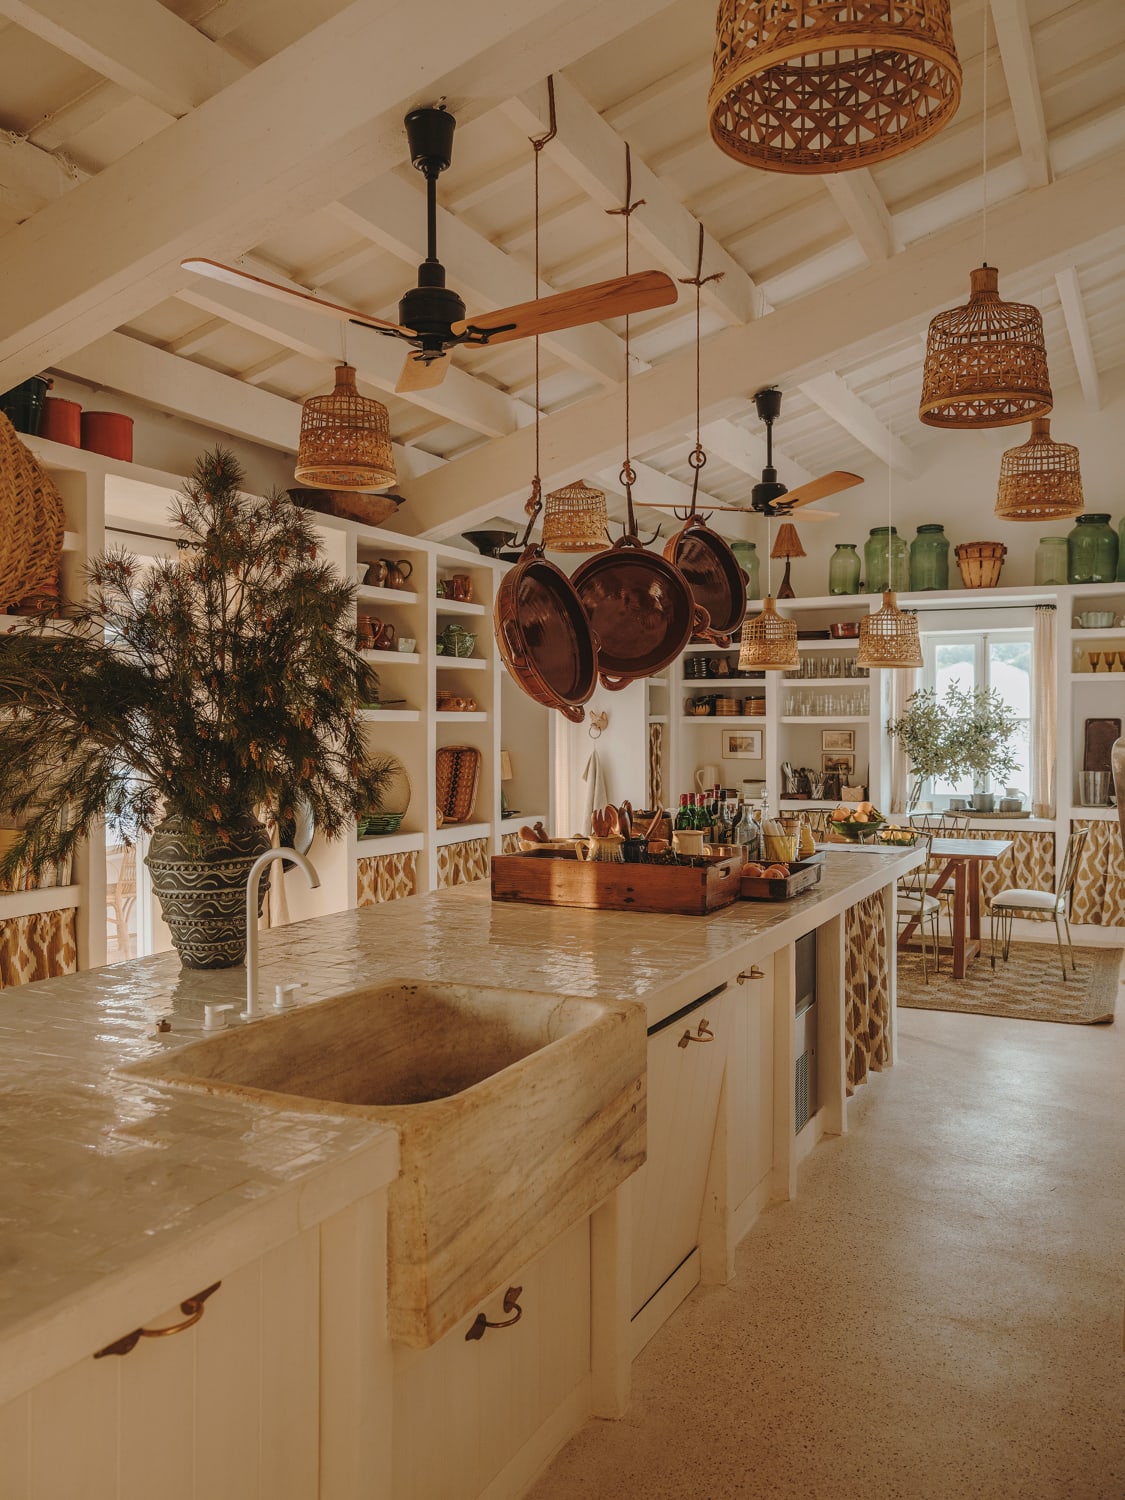 Country kitchen in a renovated 19th century farmhouse in Menorca, a Spanish island in the Mediterranean Sea